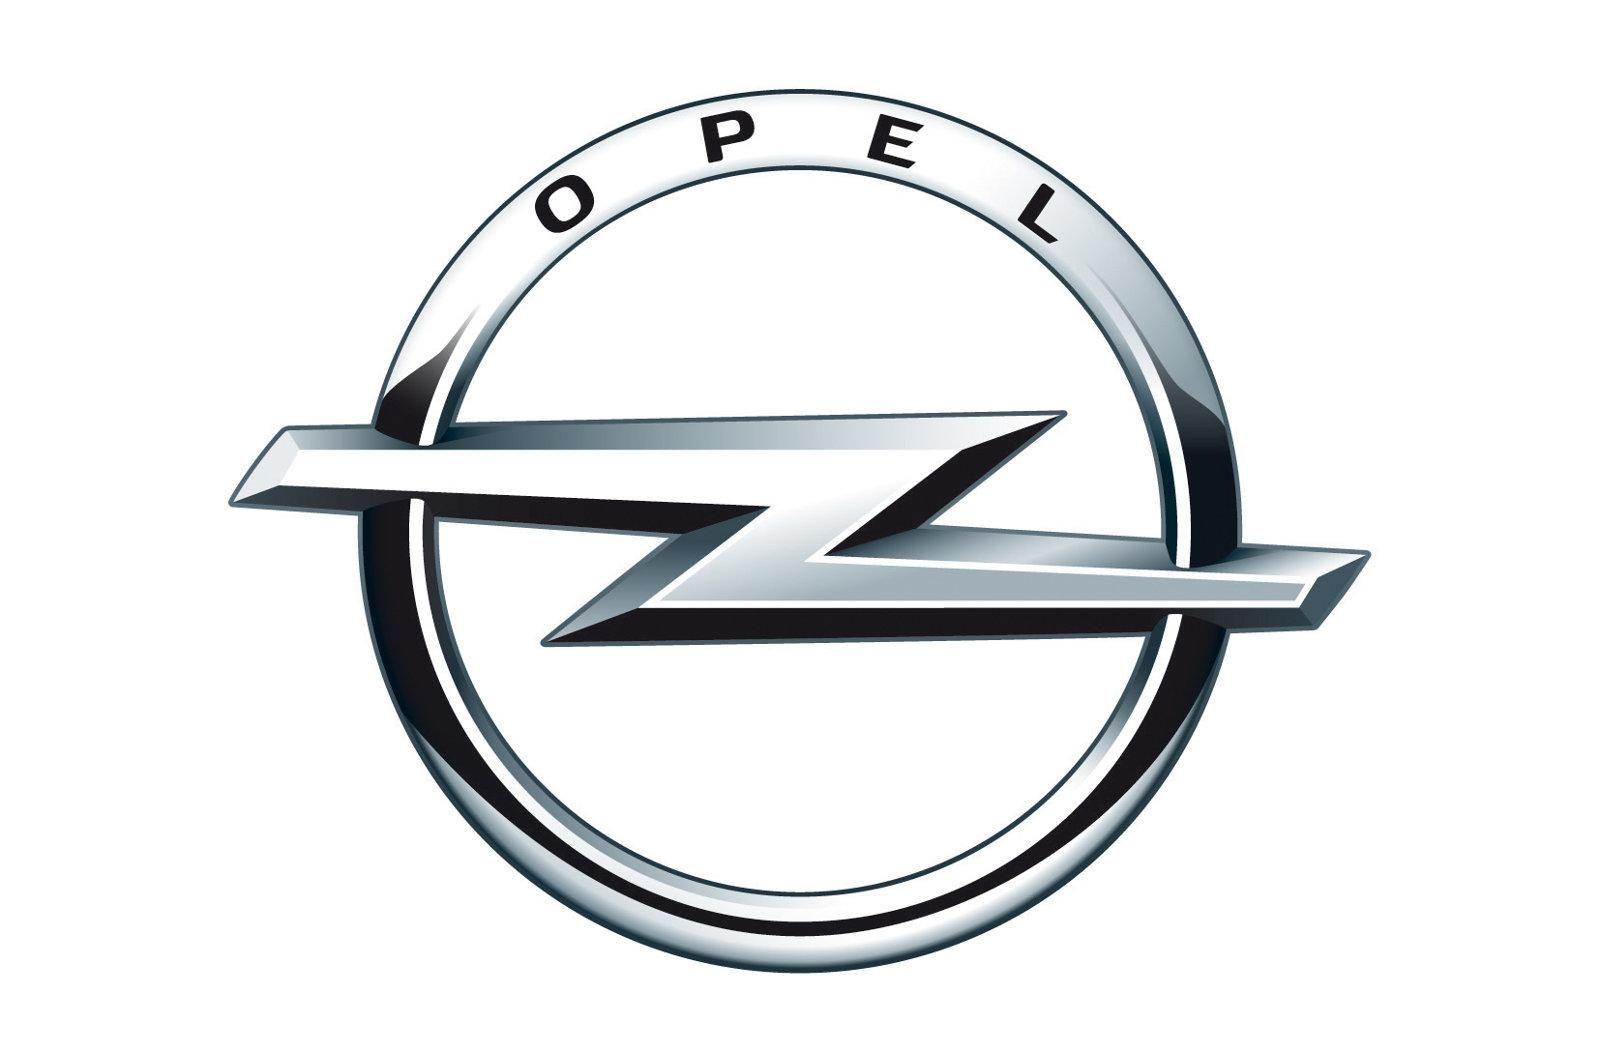 Z Car Company Logo - Opel Logo, Opel Car Symbol and History | Car Brand Names.com